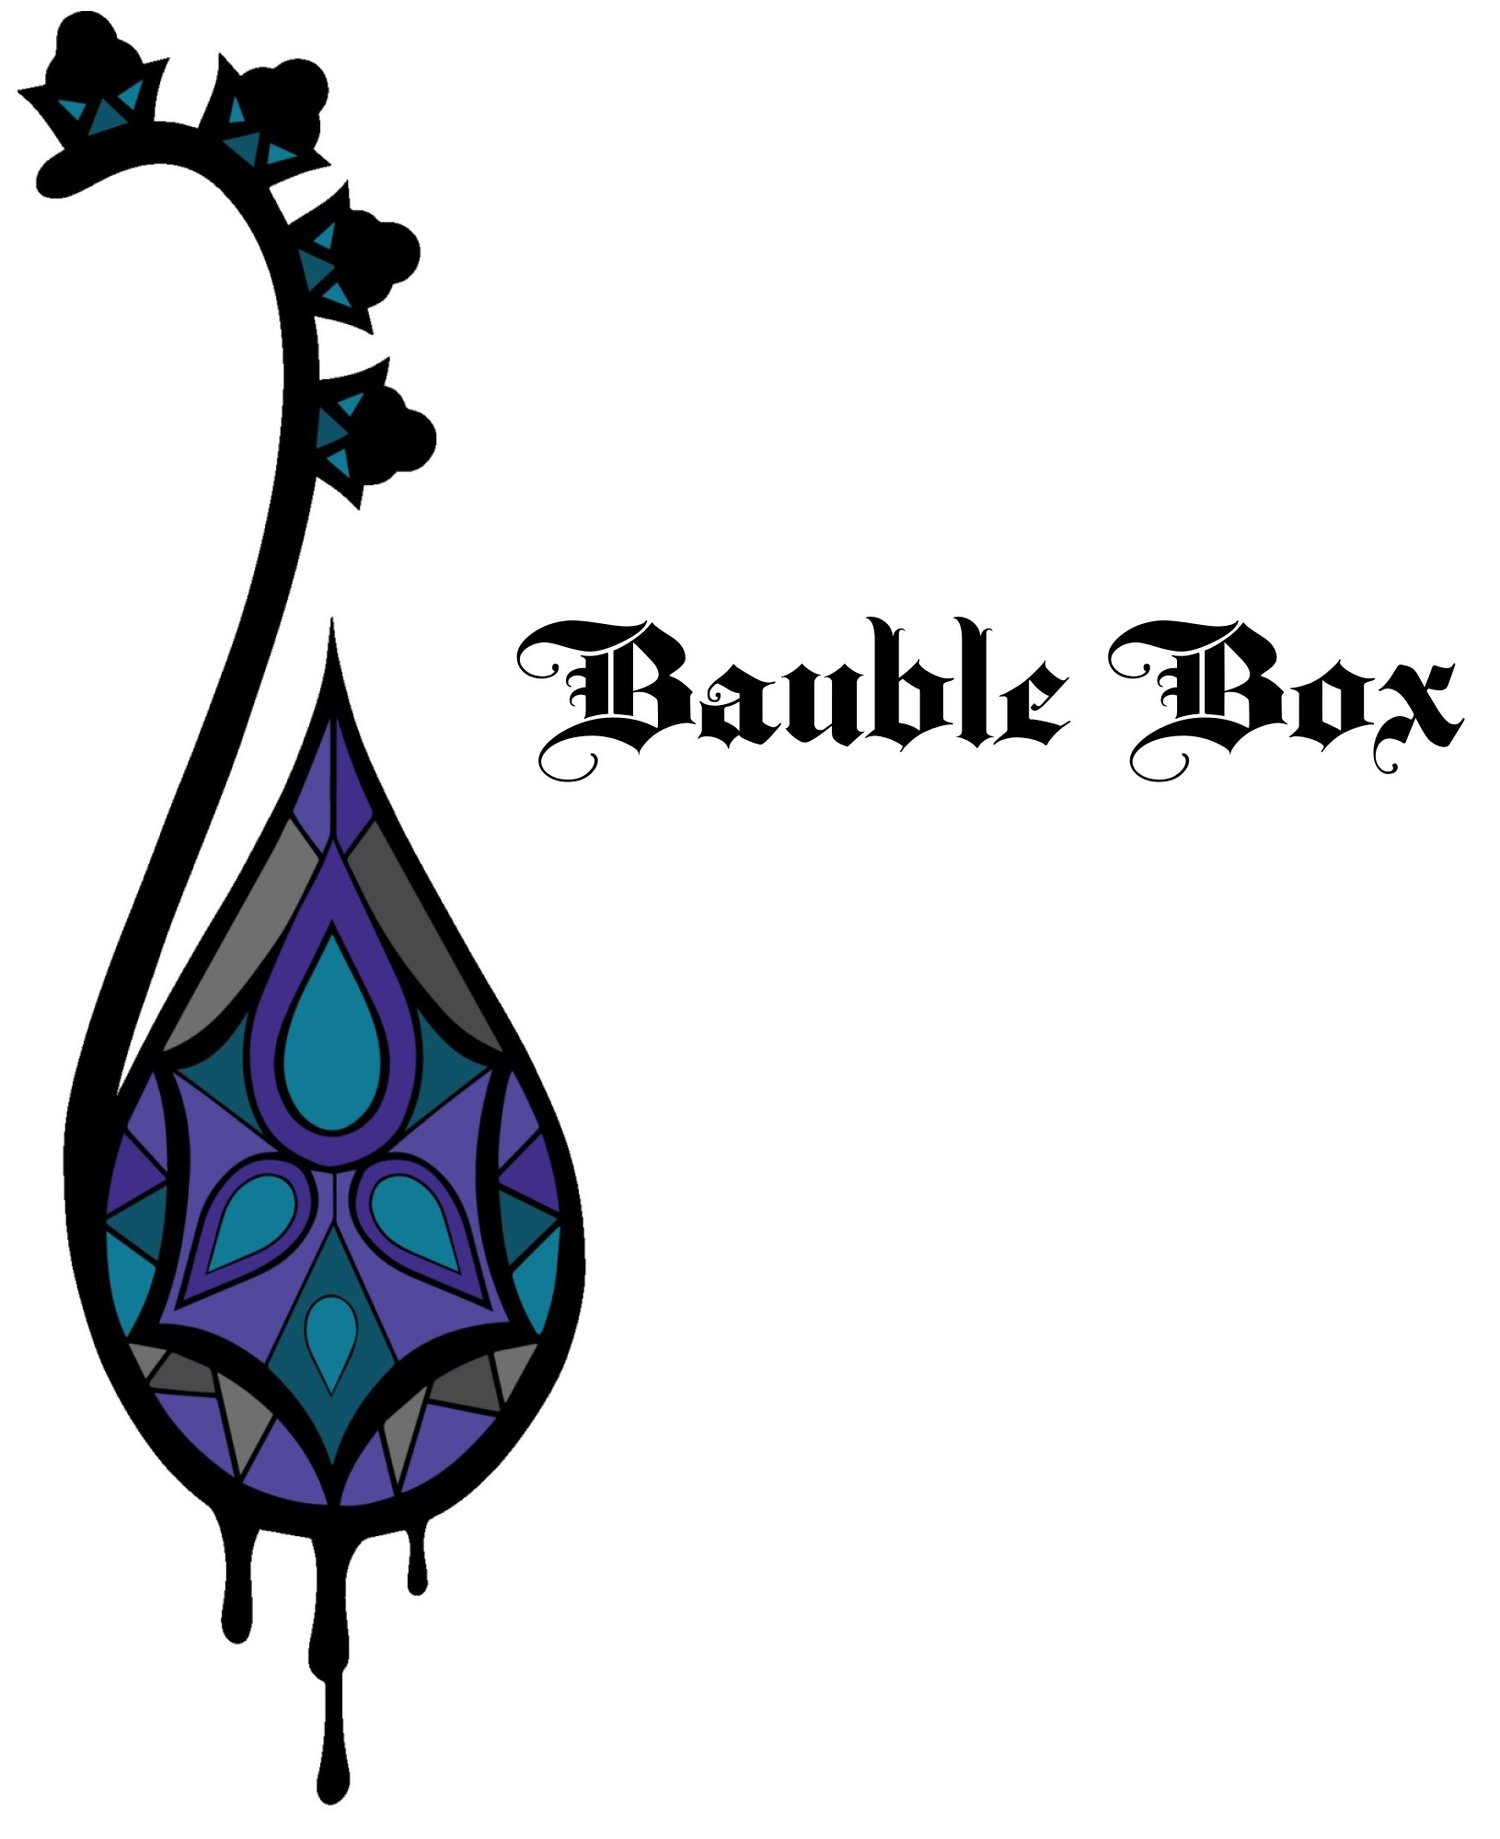 Bauble Box